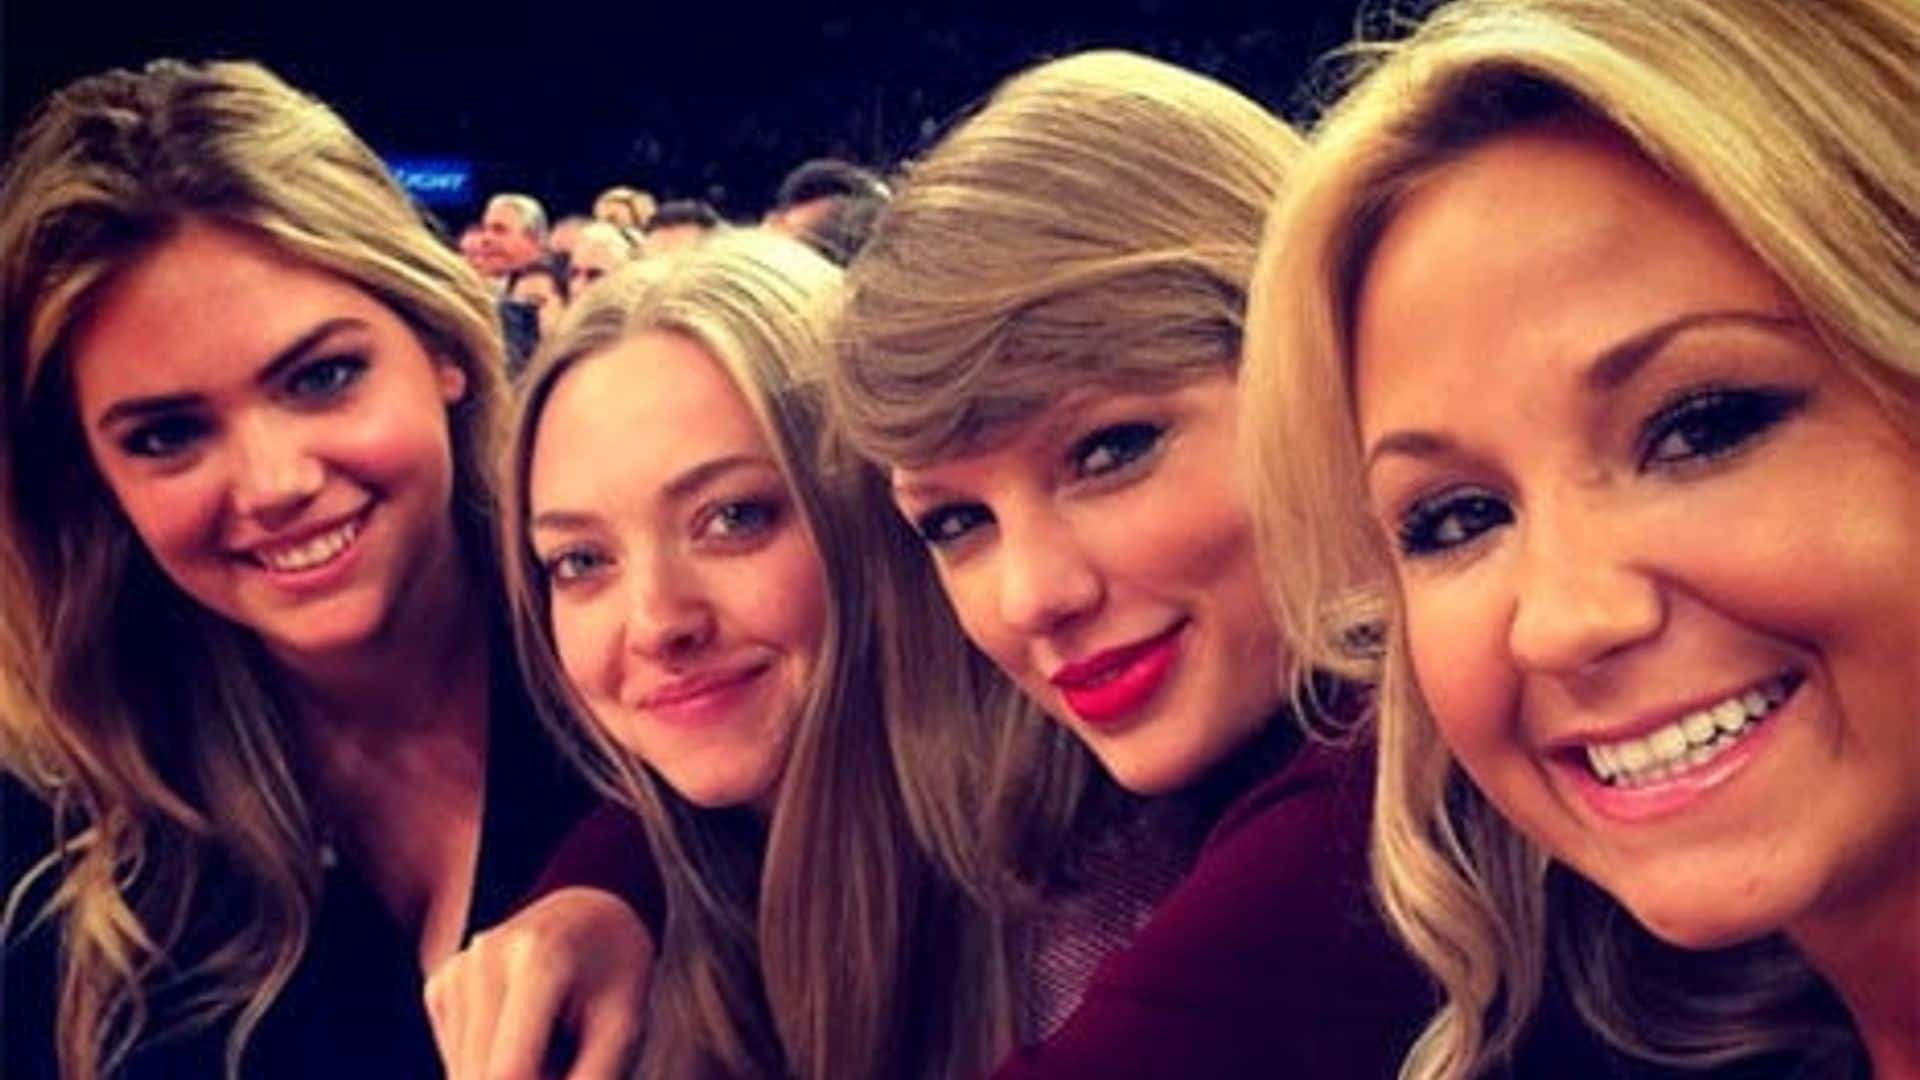 Taylor Swift, Kate Upton and Amanda Seyfried bond at Knicks game